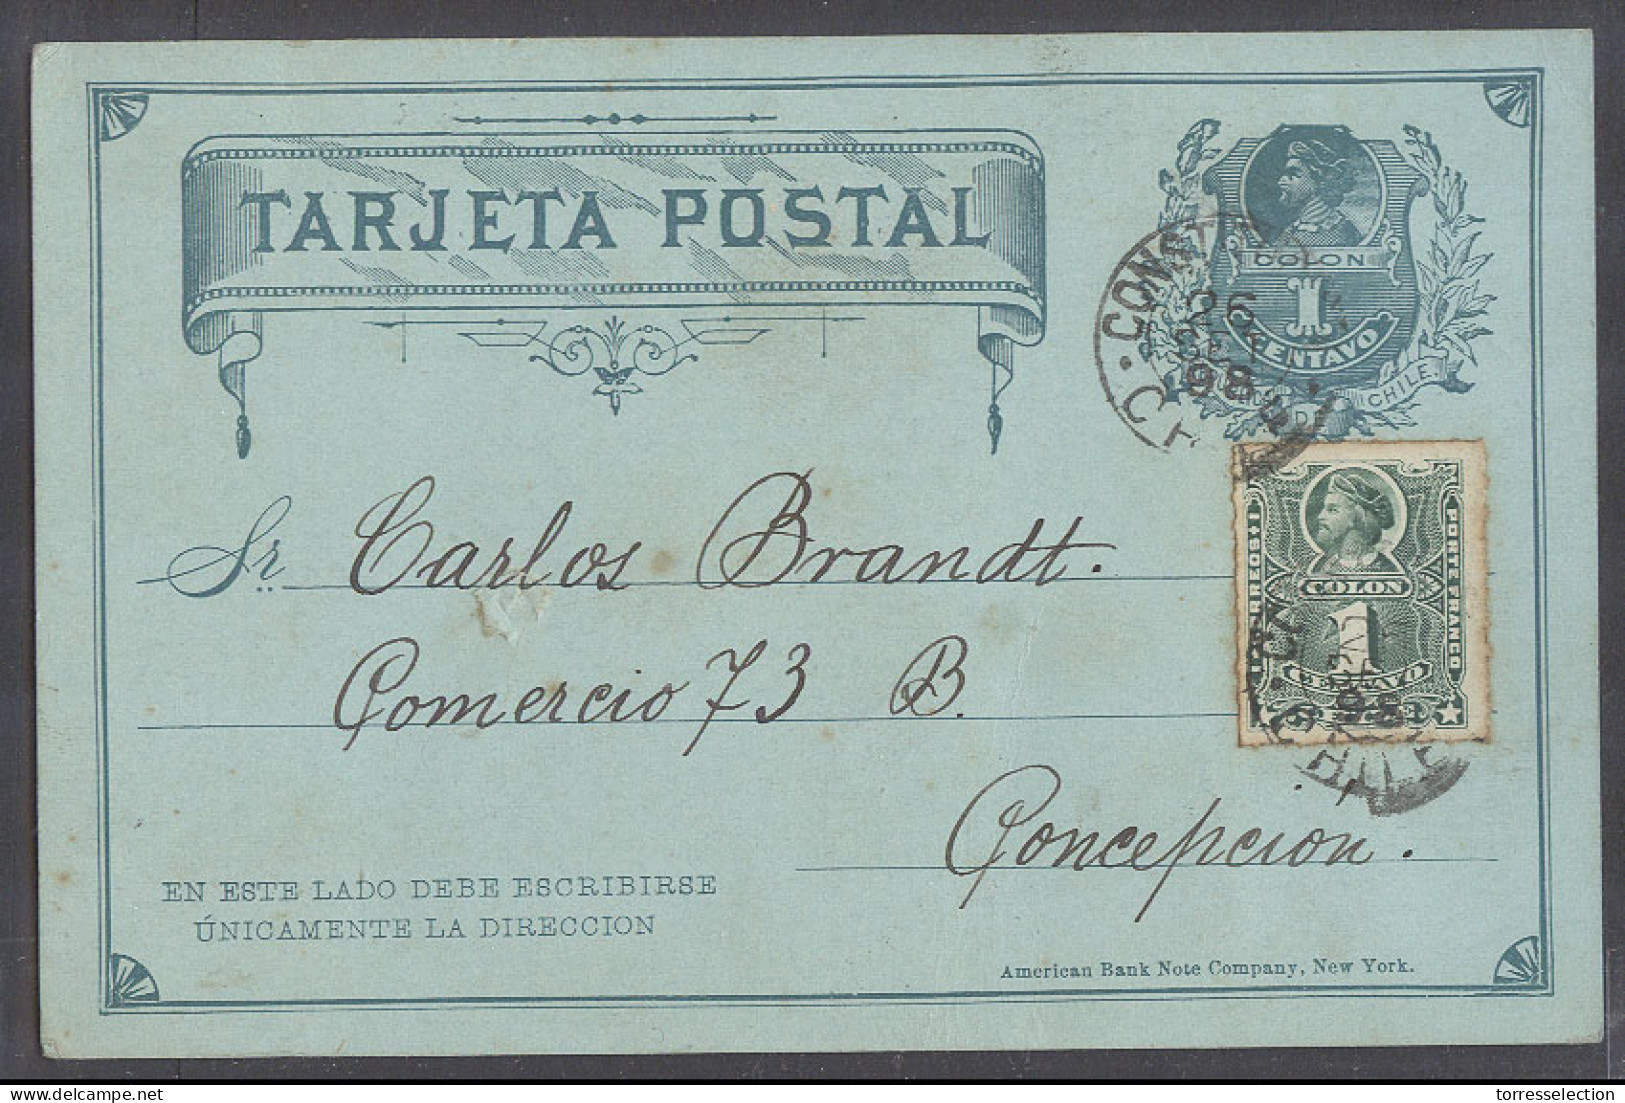 CHILE - Stationery. 1898 (25 Sept). Constitucion - Conceptcion (28 Sept). 1c Green Stat Card 1c Adtl. Fine Used. - Chile